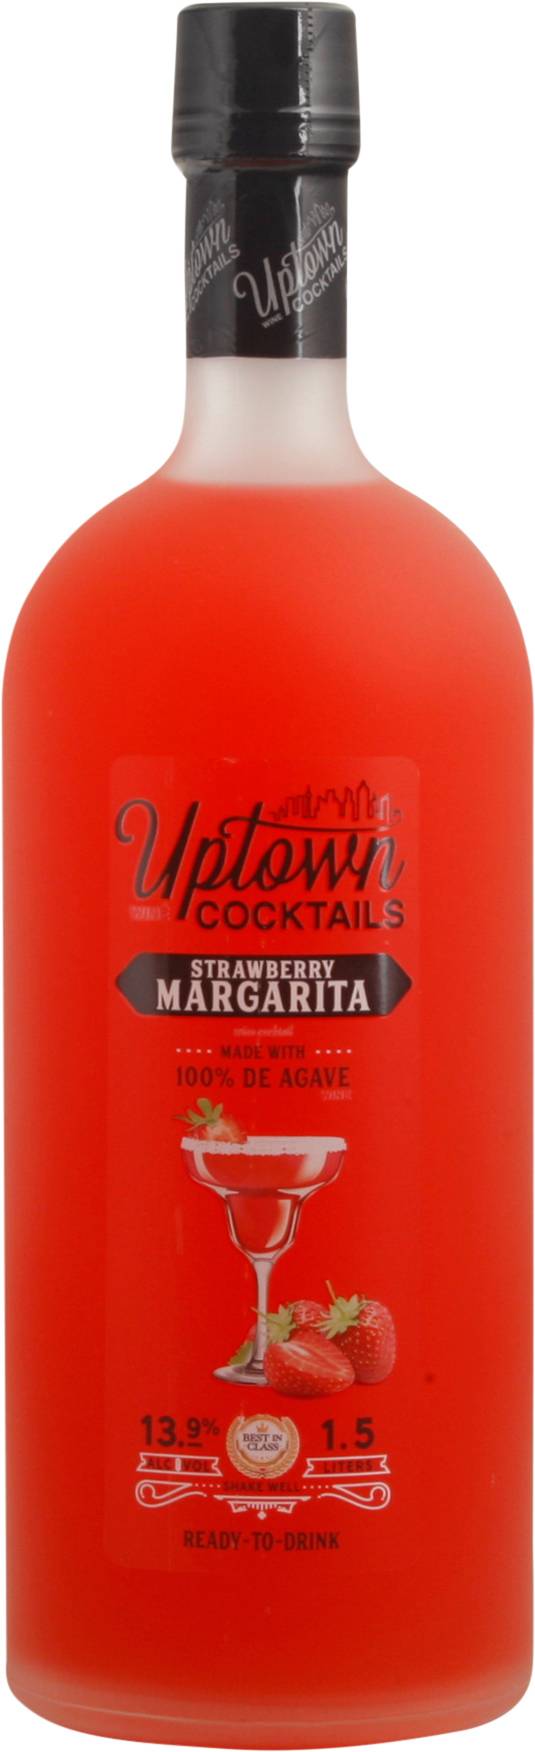 Uptown Cocktails Strawberry Margarita Liquor (1.5 L)